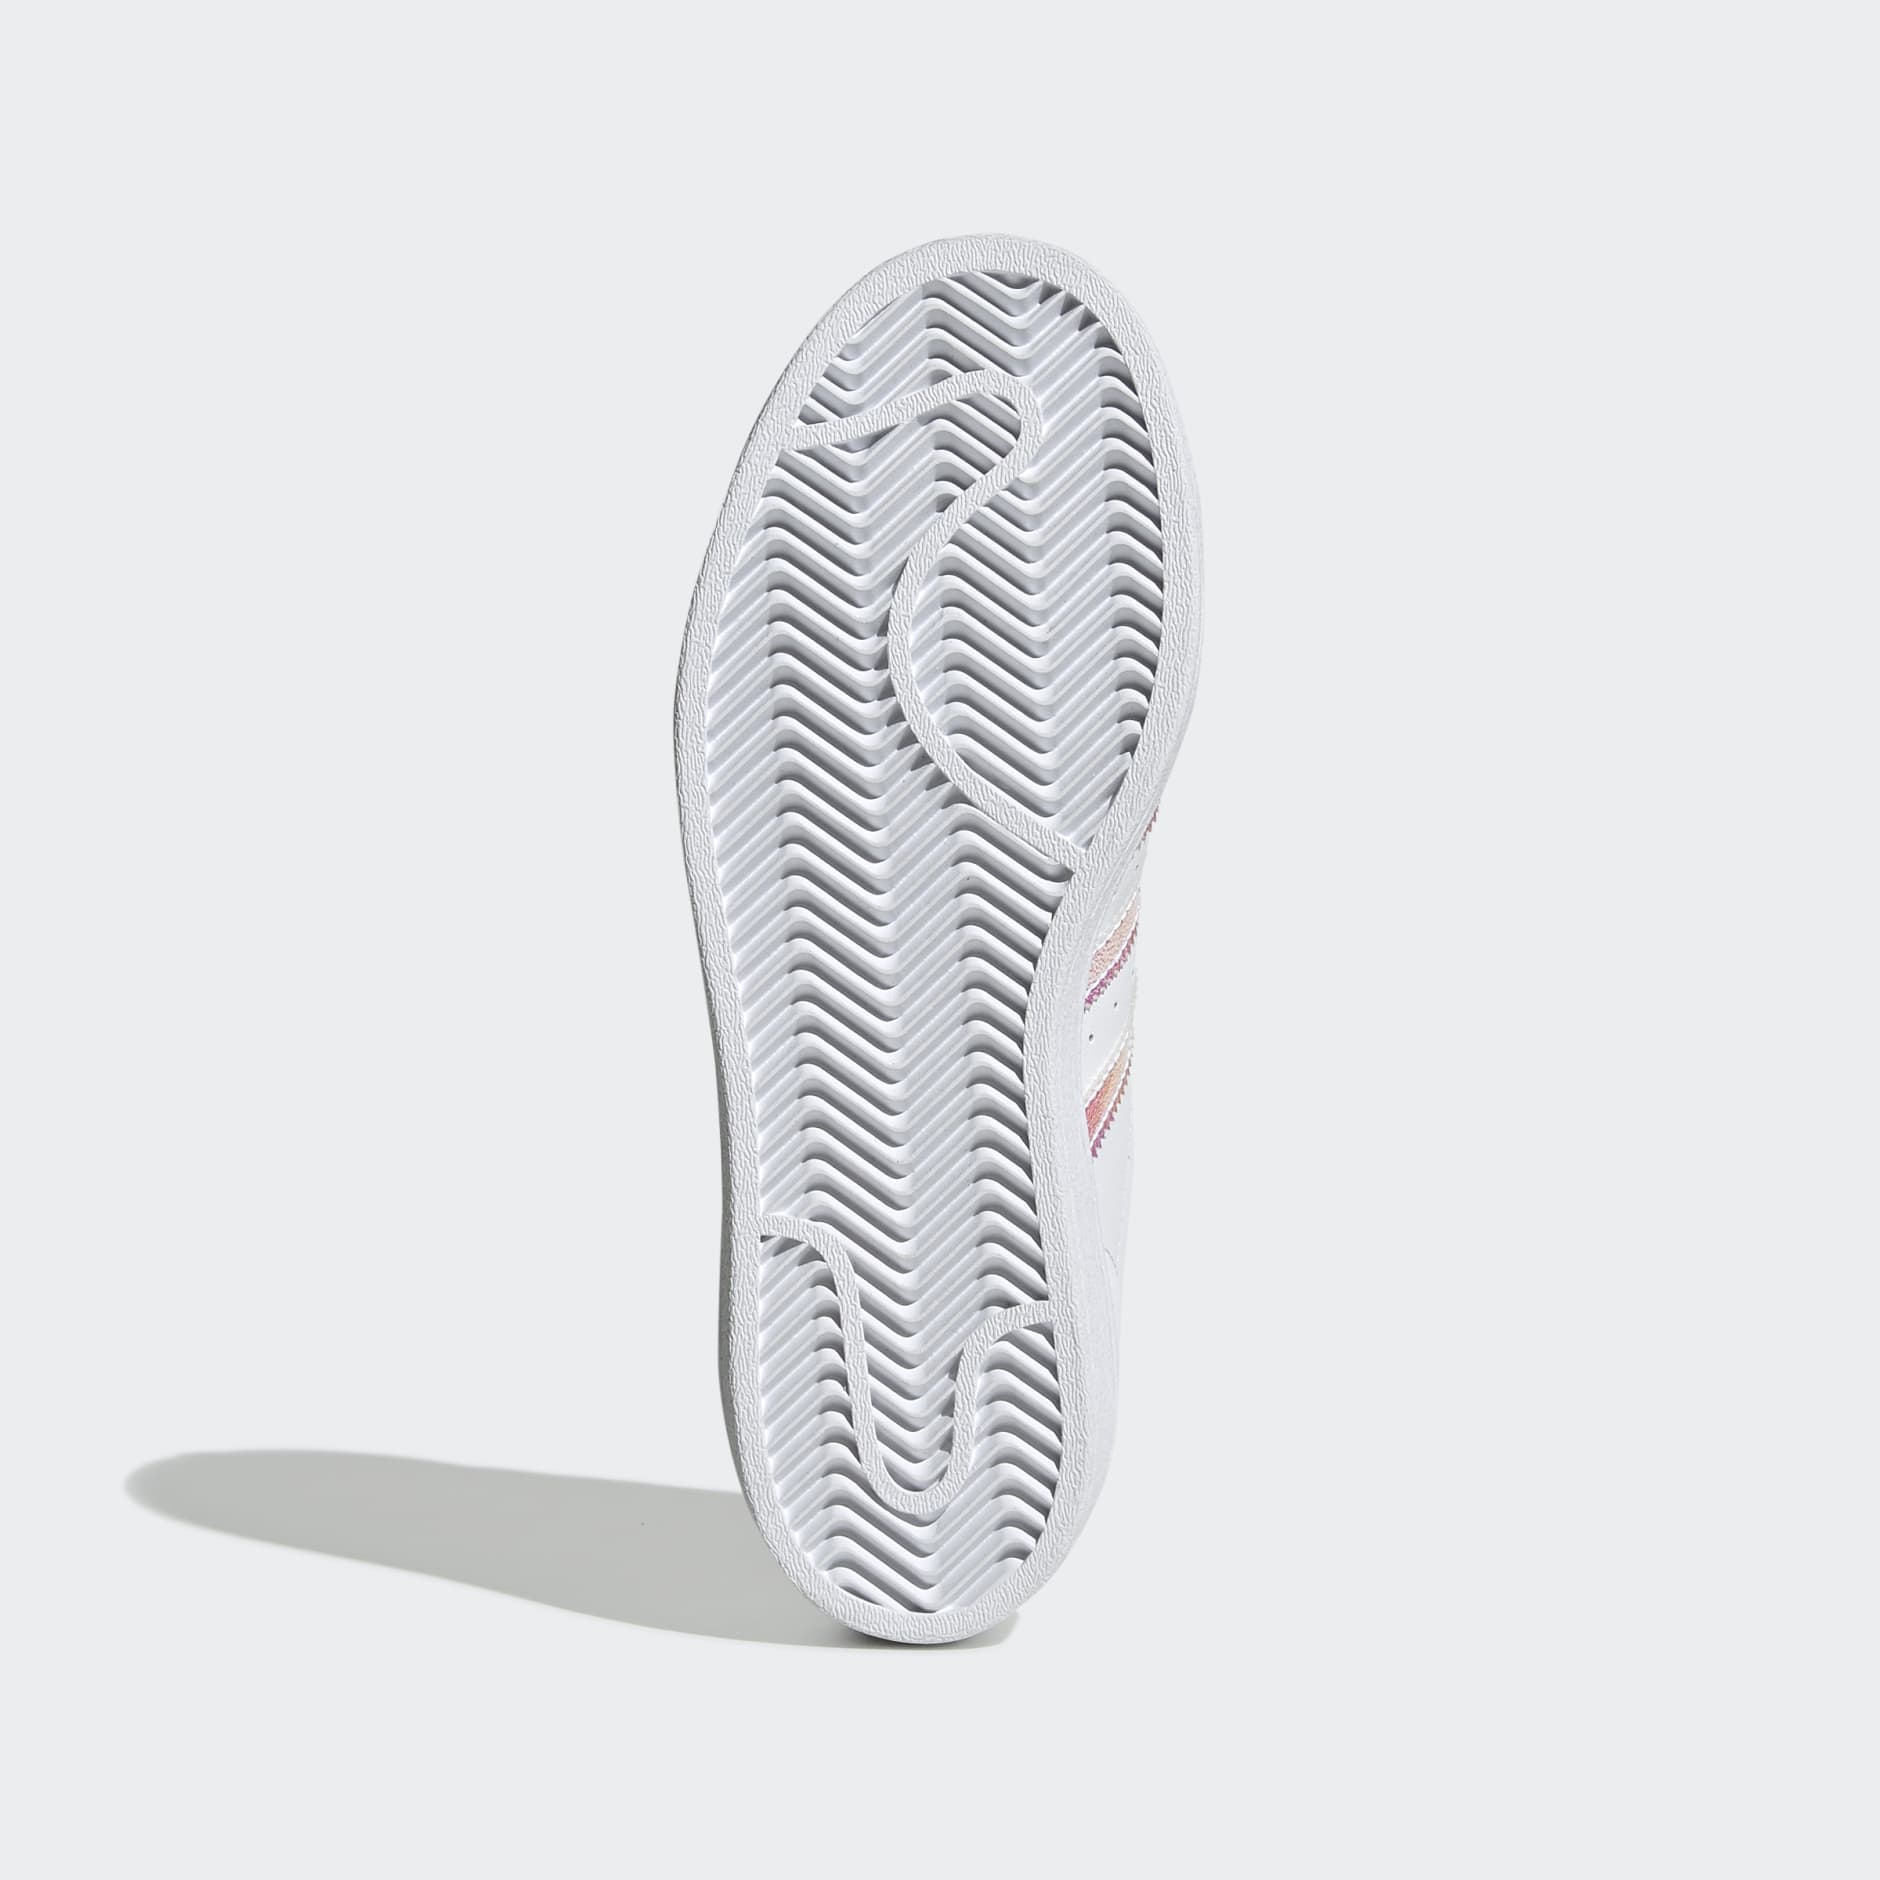 Adidas Originals - Baskets Femme Superstar FV3139 Footwear White